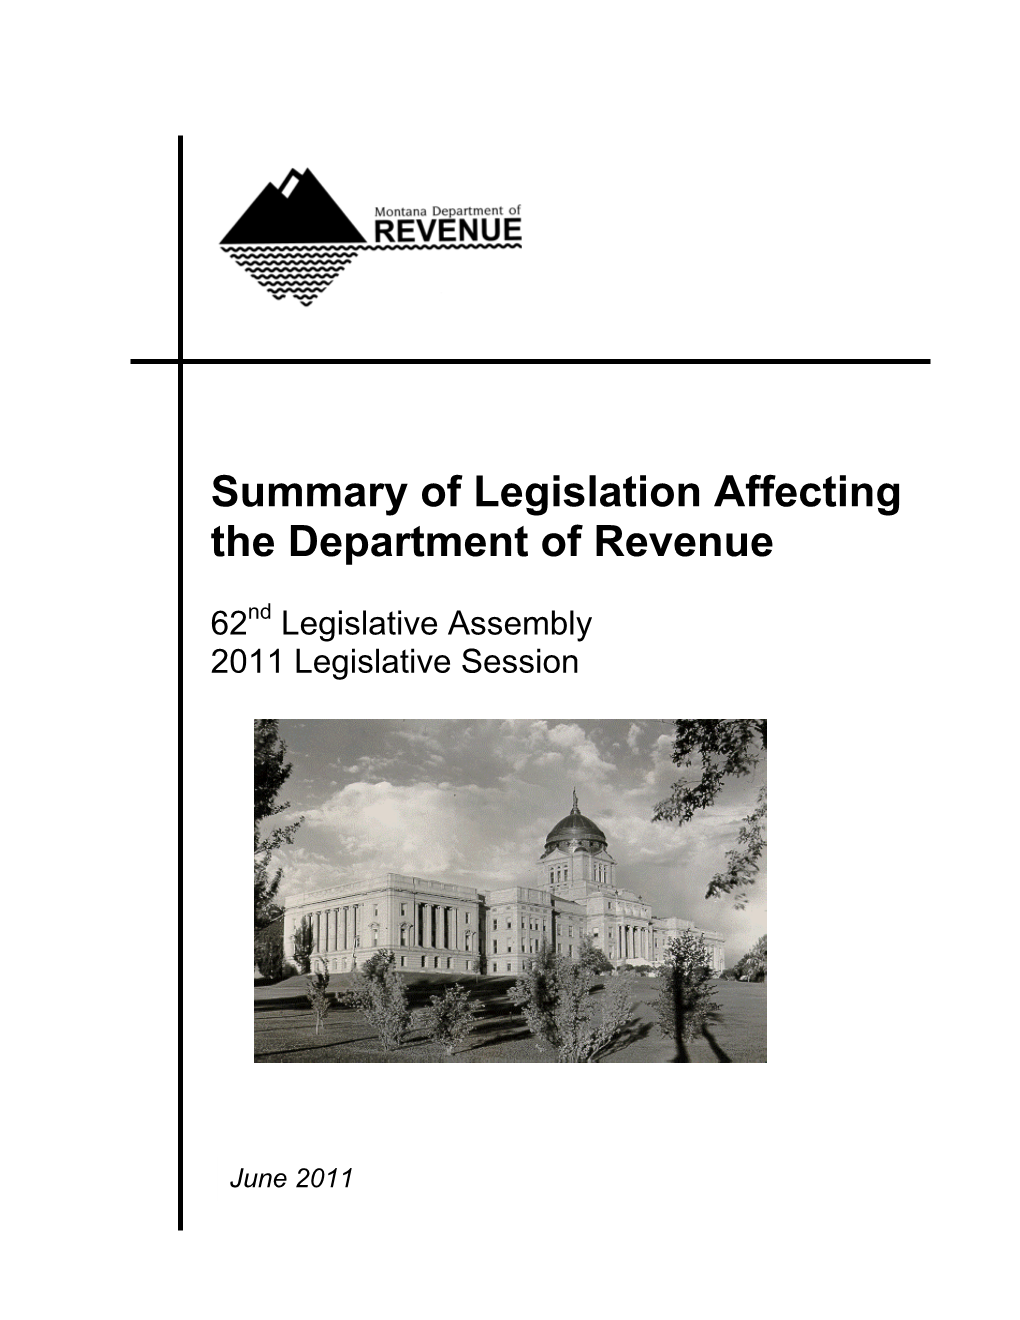 Summary of Legislation Affecting the Department of Revenue